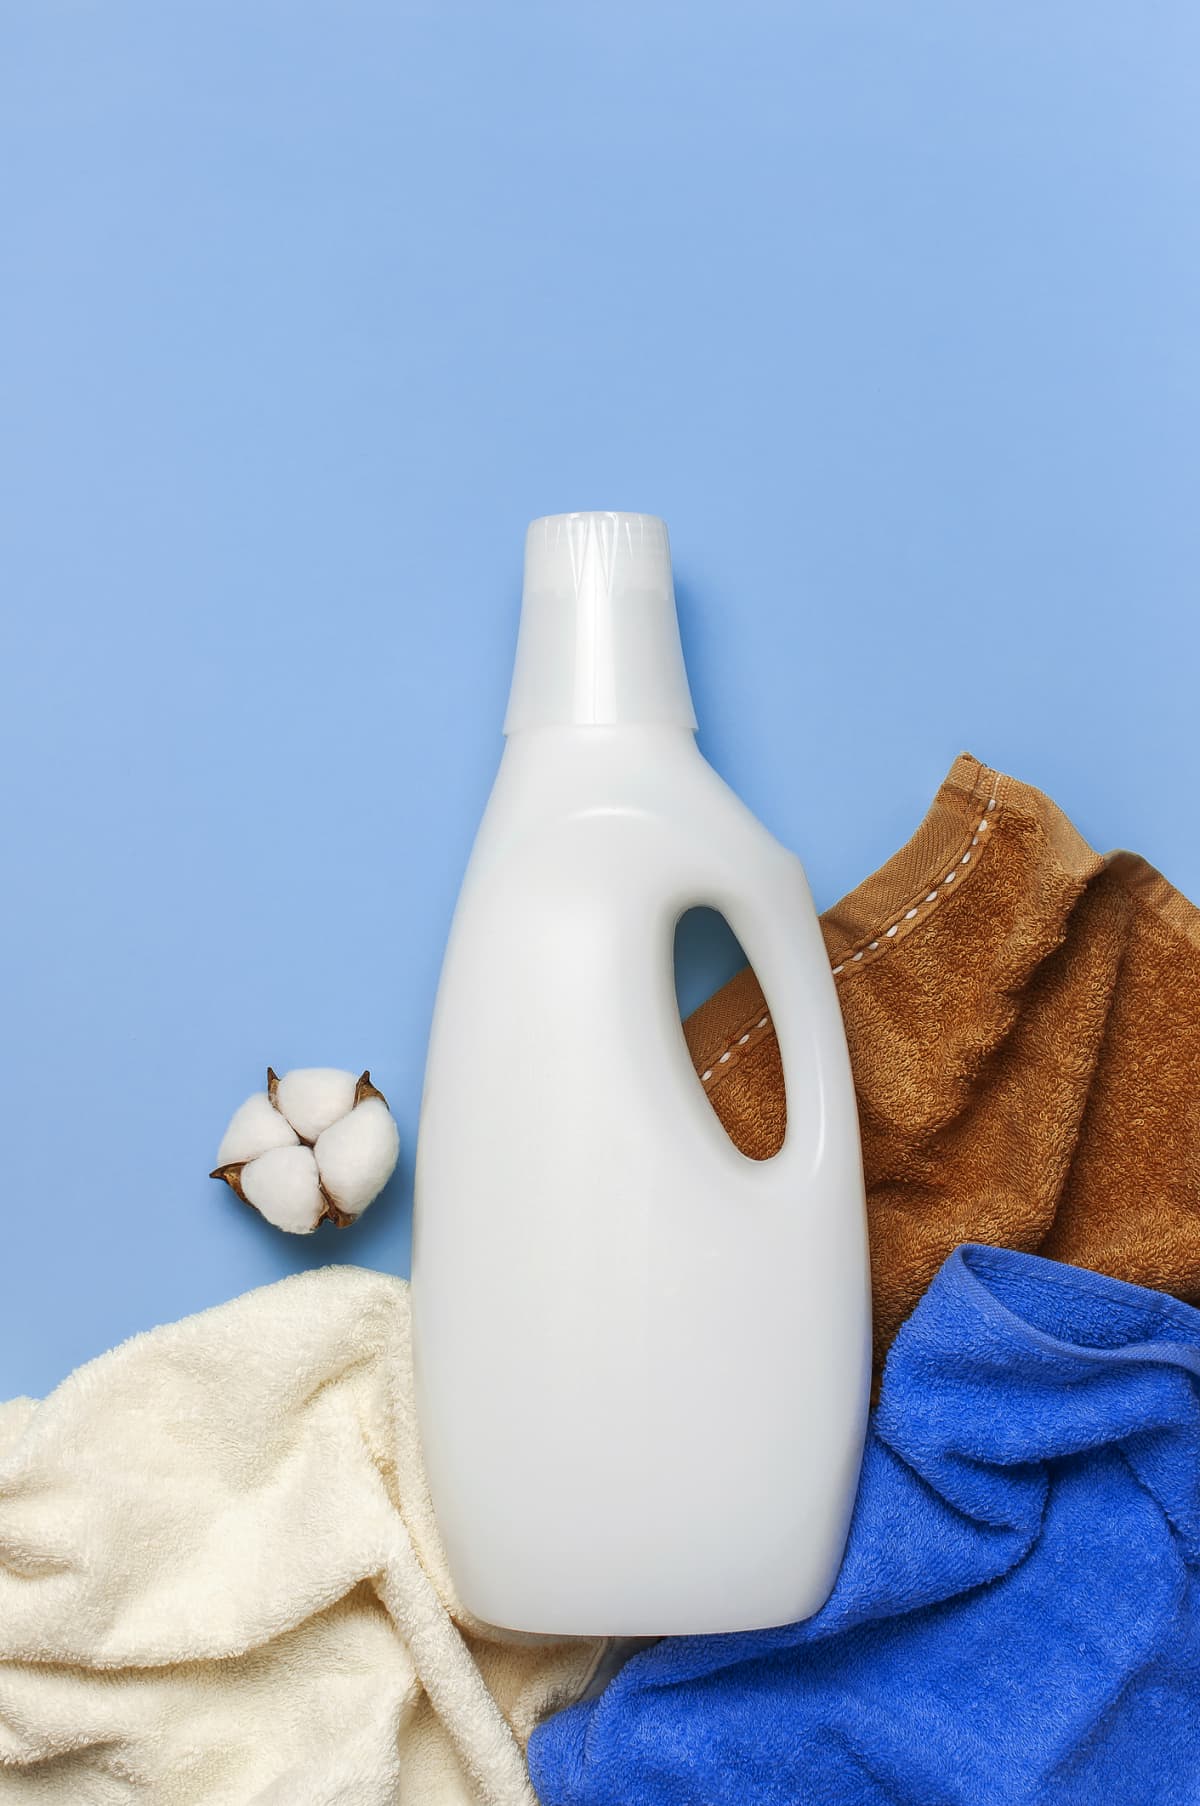 Generic Laundry Detergent Bottle among towels